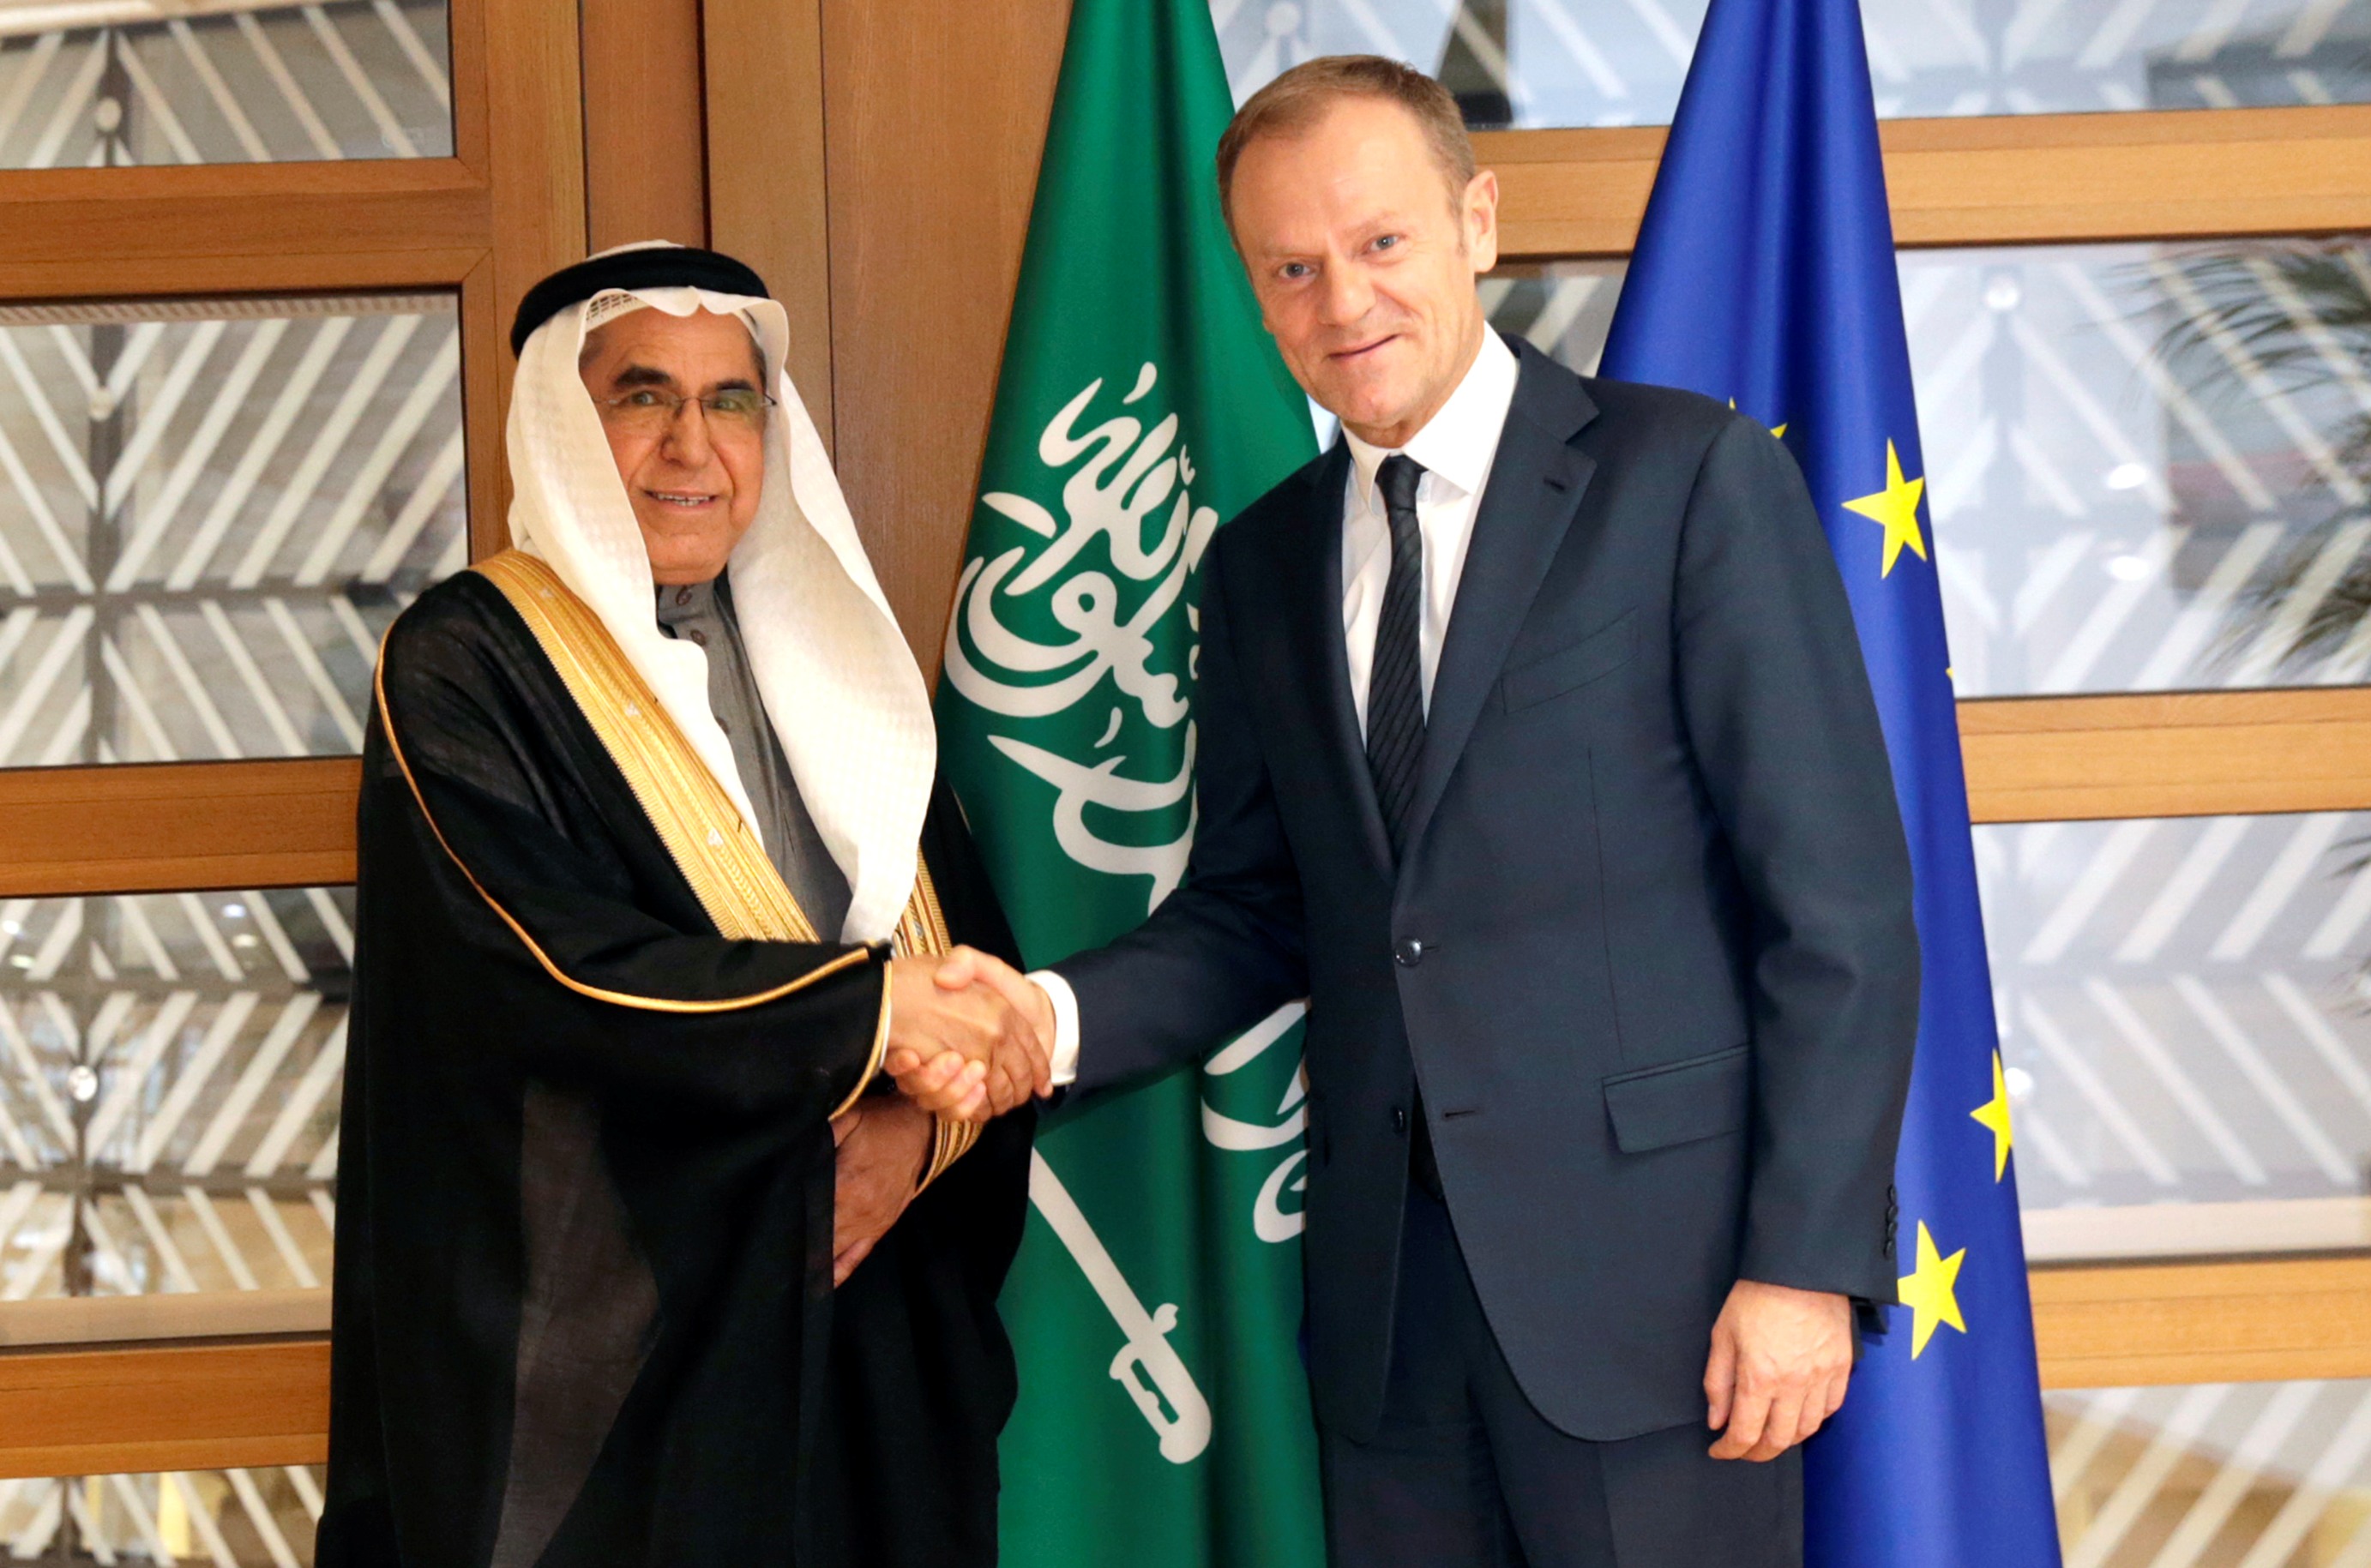 Ambassador Saad Al-Arify of Saudi Arabia presented his credentials to the President of the European Council Donald Tusk